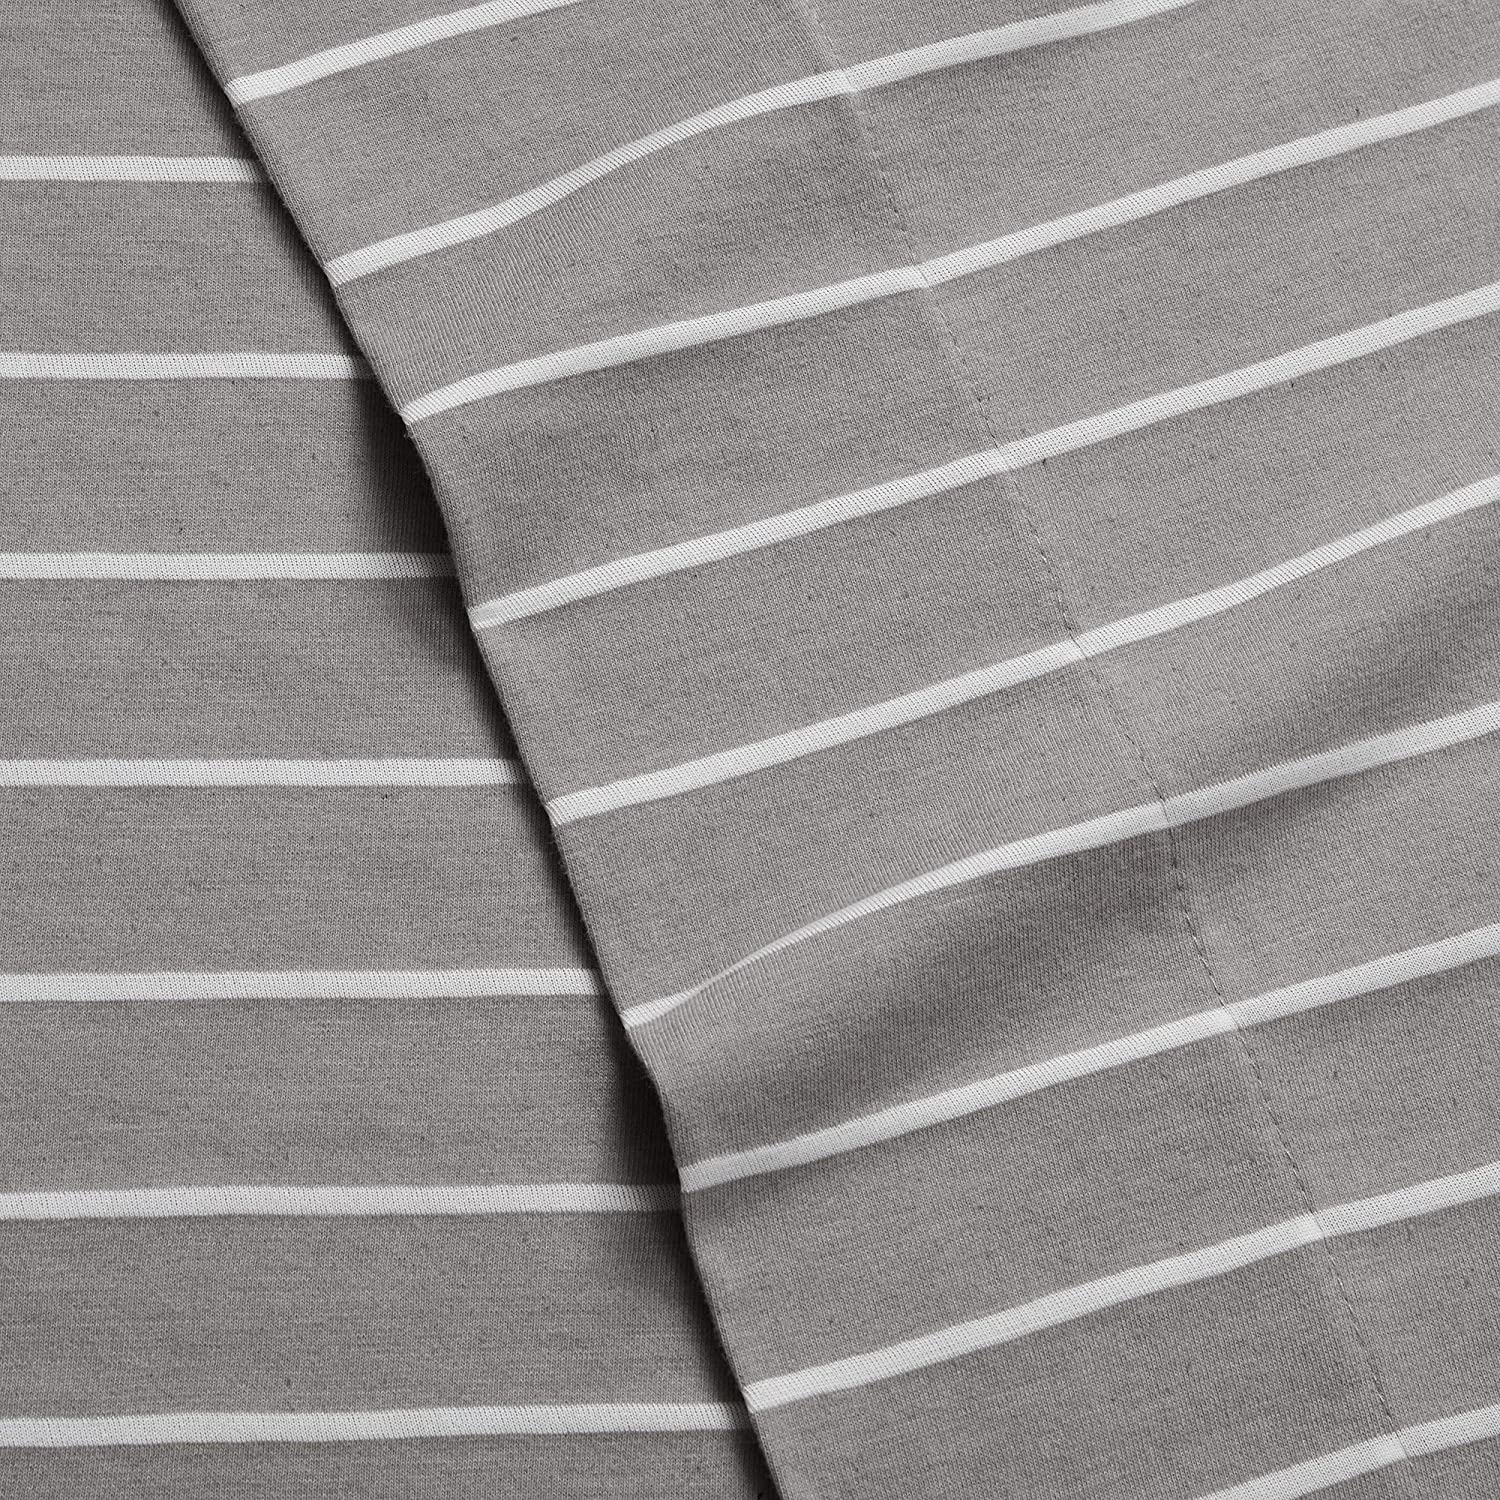 Intelligent Design Cotton Blend Jersey Knit All Season Sheet Set, Full, Grey Stripe